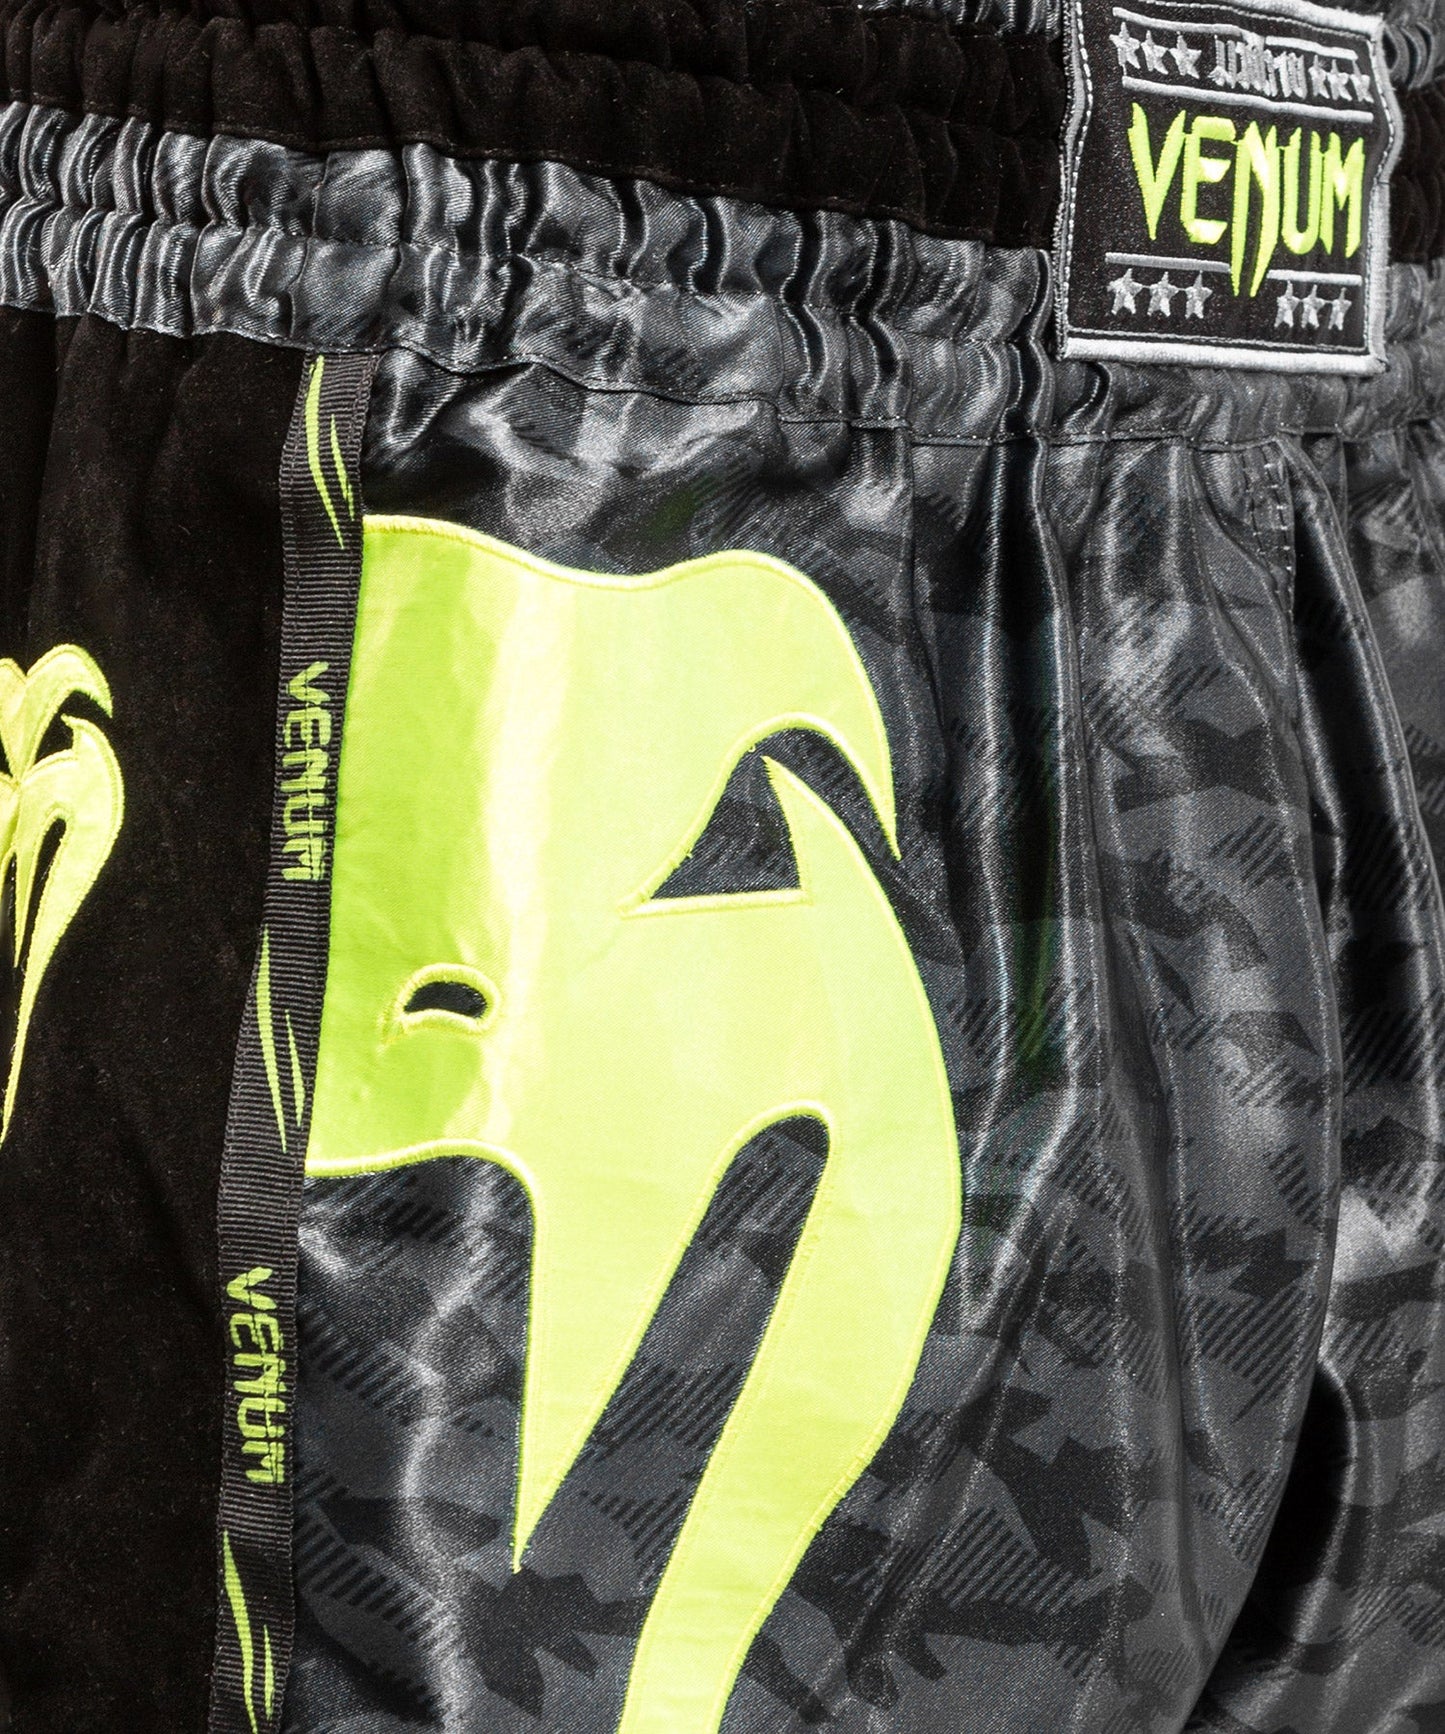 Venum Giant Camo Muay Thai Shorts - Black/Yellow